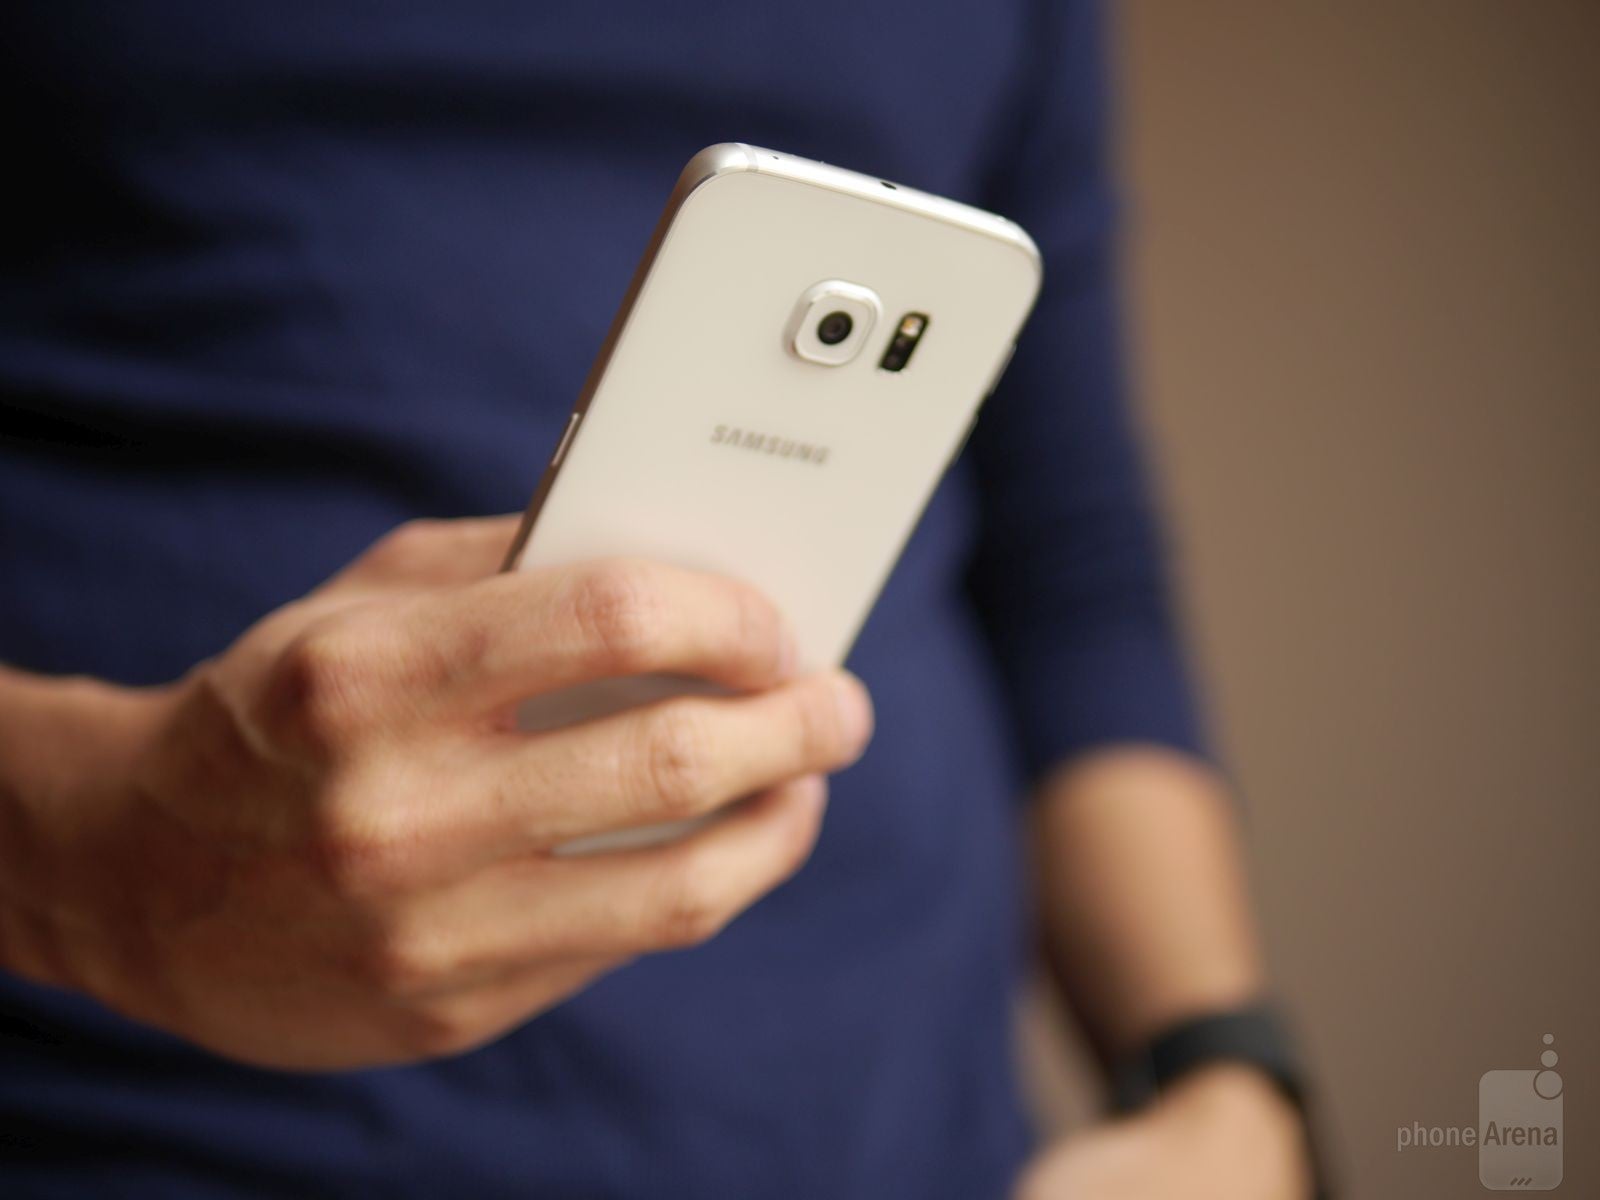 Samsung Galaxy S6 edge hands-on